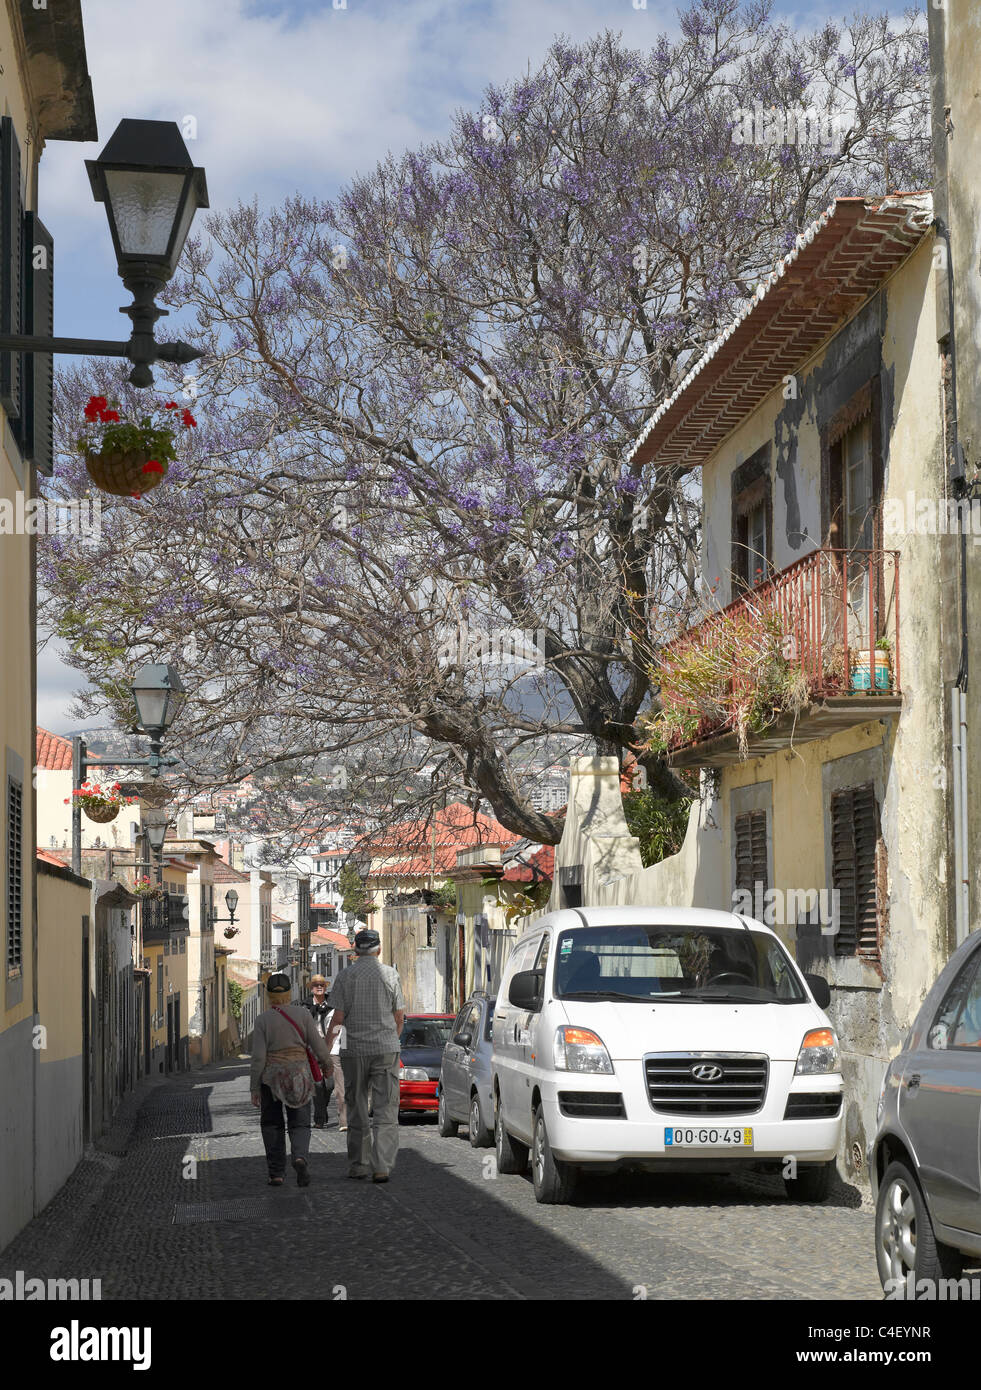 Cars parked in narrow street of Rua De Santa Maria Old Town Funchal Madeira Portugal EU Europe Stock Photo